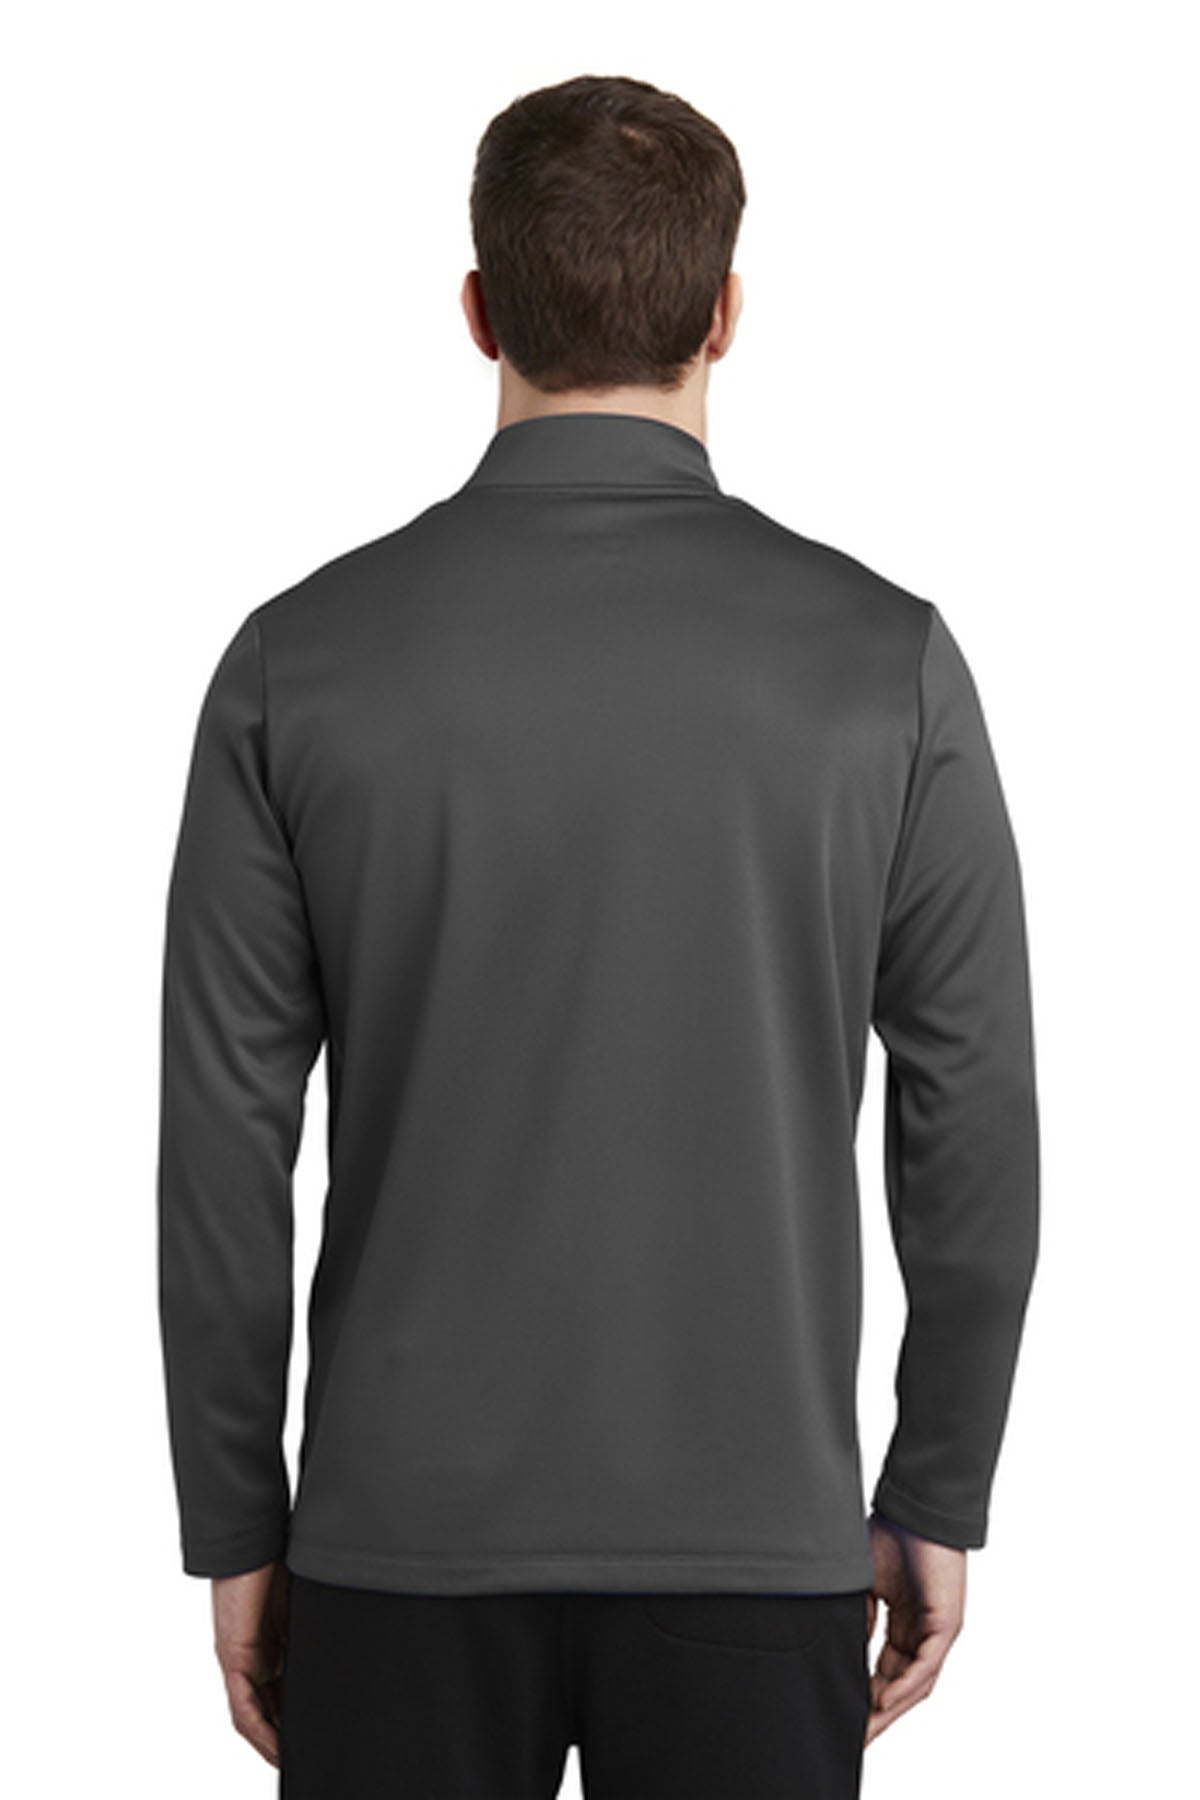 Nike Therma-FIT Full Zip Fleece Jacket